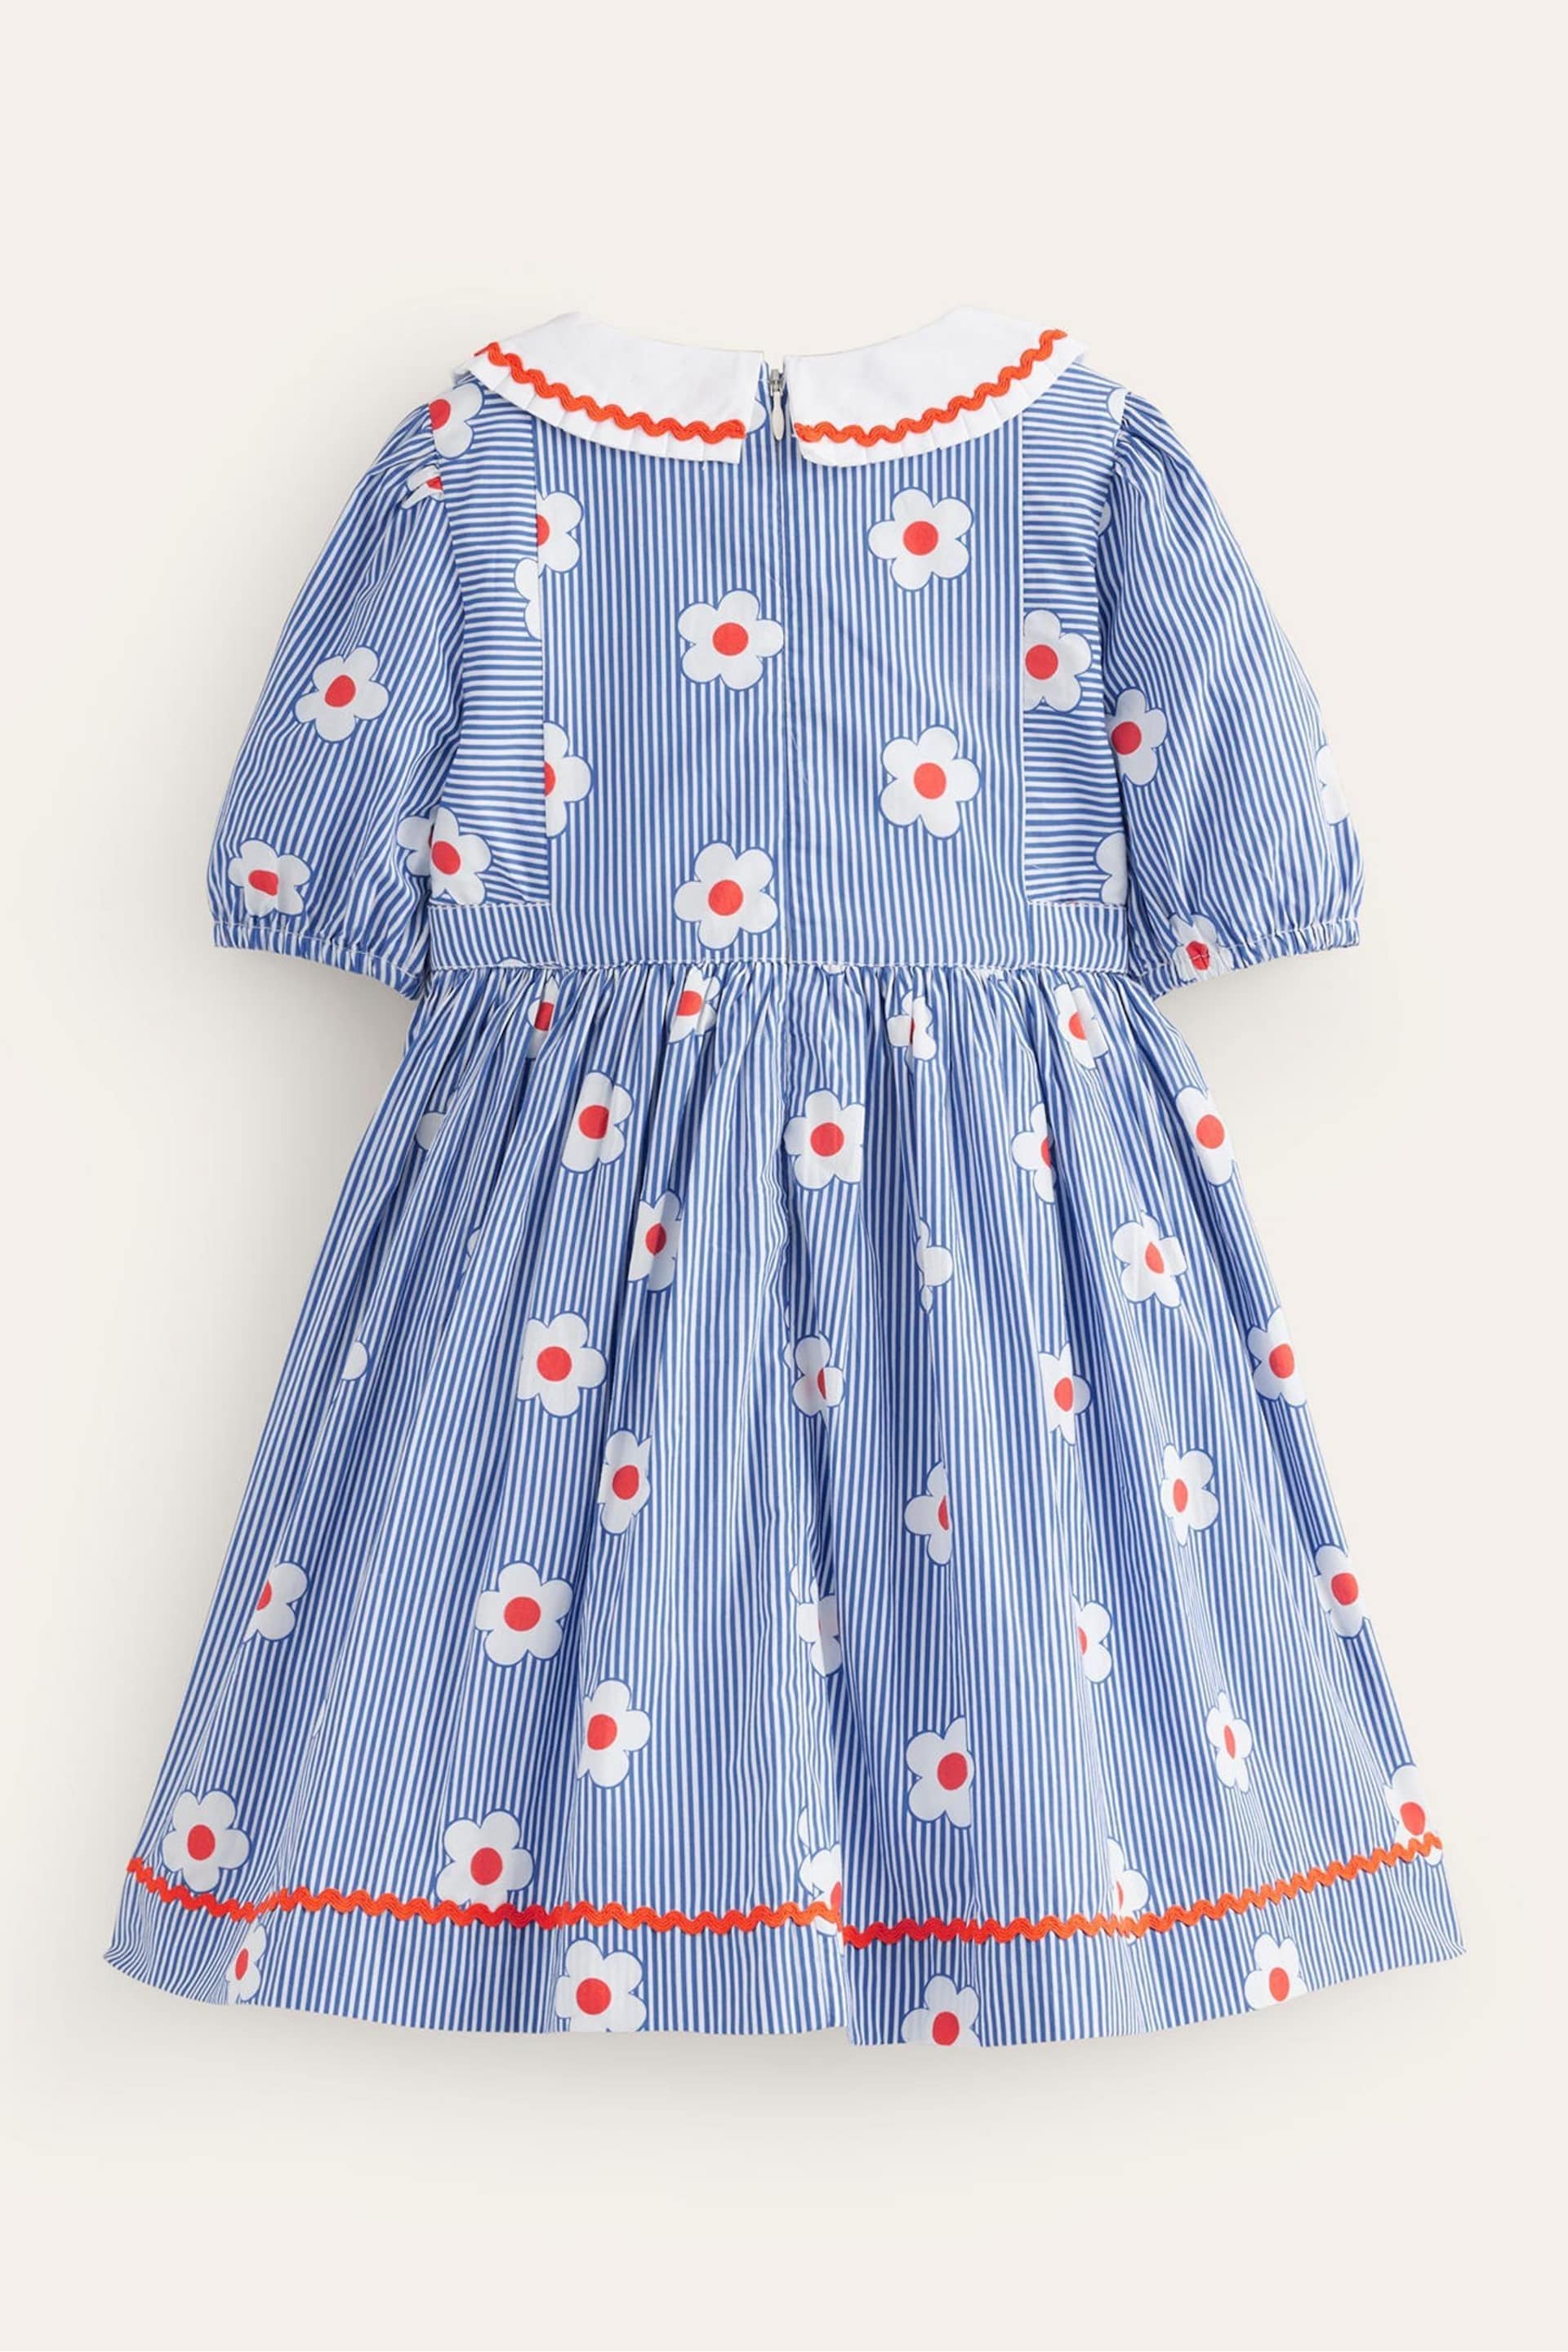 Boden Blue Collared Sailor Dress - Image 3 of 4